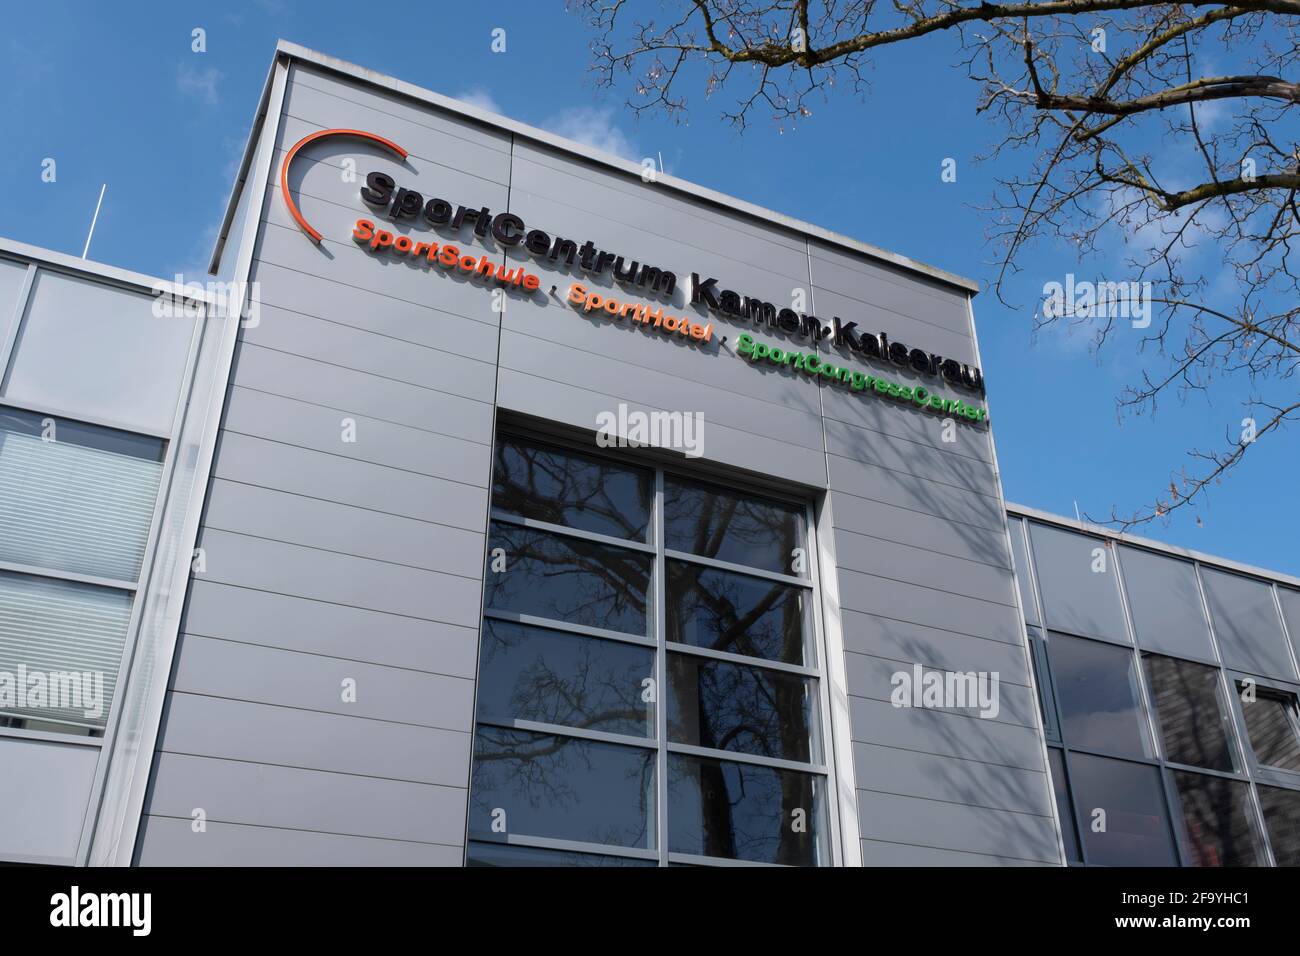 Sportzentrum Kamen Kaiserau, Kamen, Ruhrgebiet, Nordrhein-Westfalen, Deutschland, Europa Stockfoto